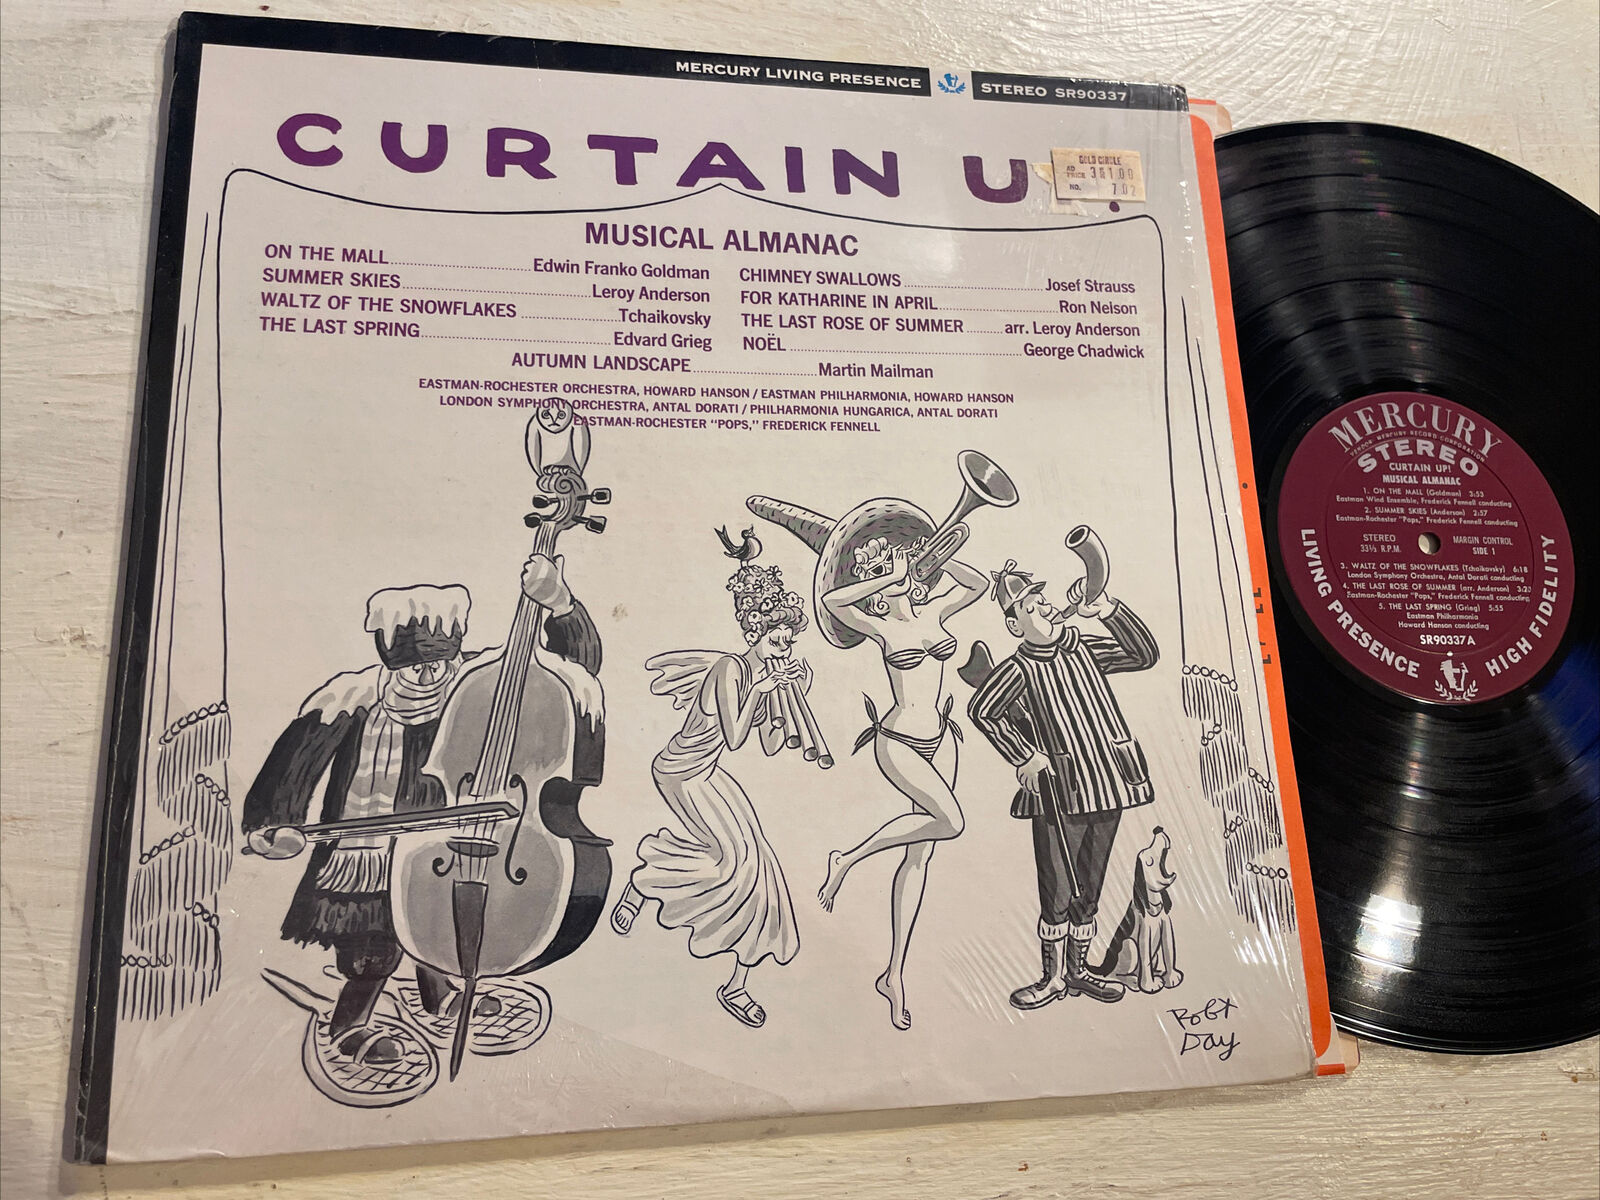 Curtain Up Musical Almanac LP Mercury Living Presence Stereo + Shrink M-